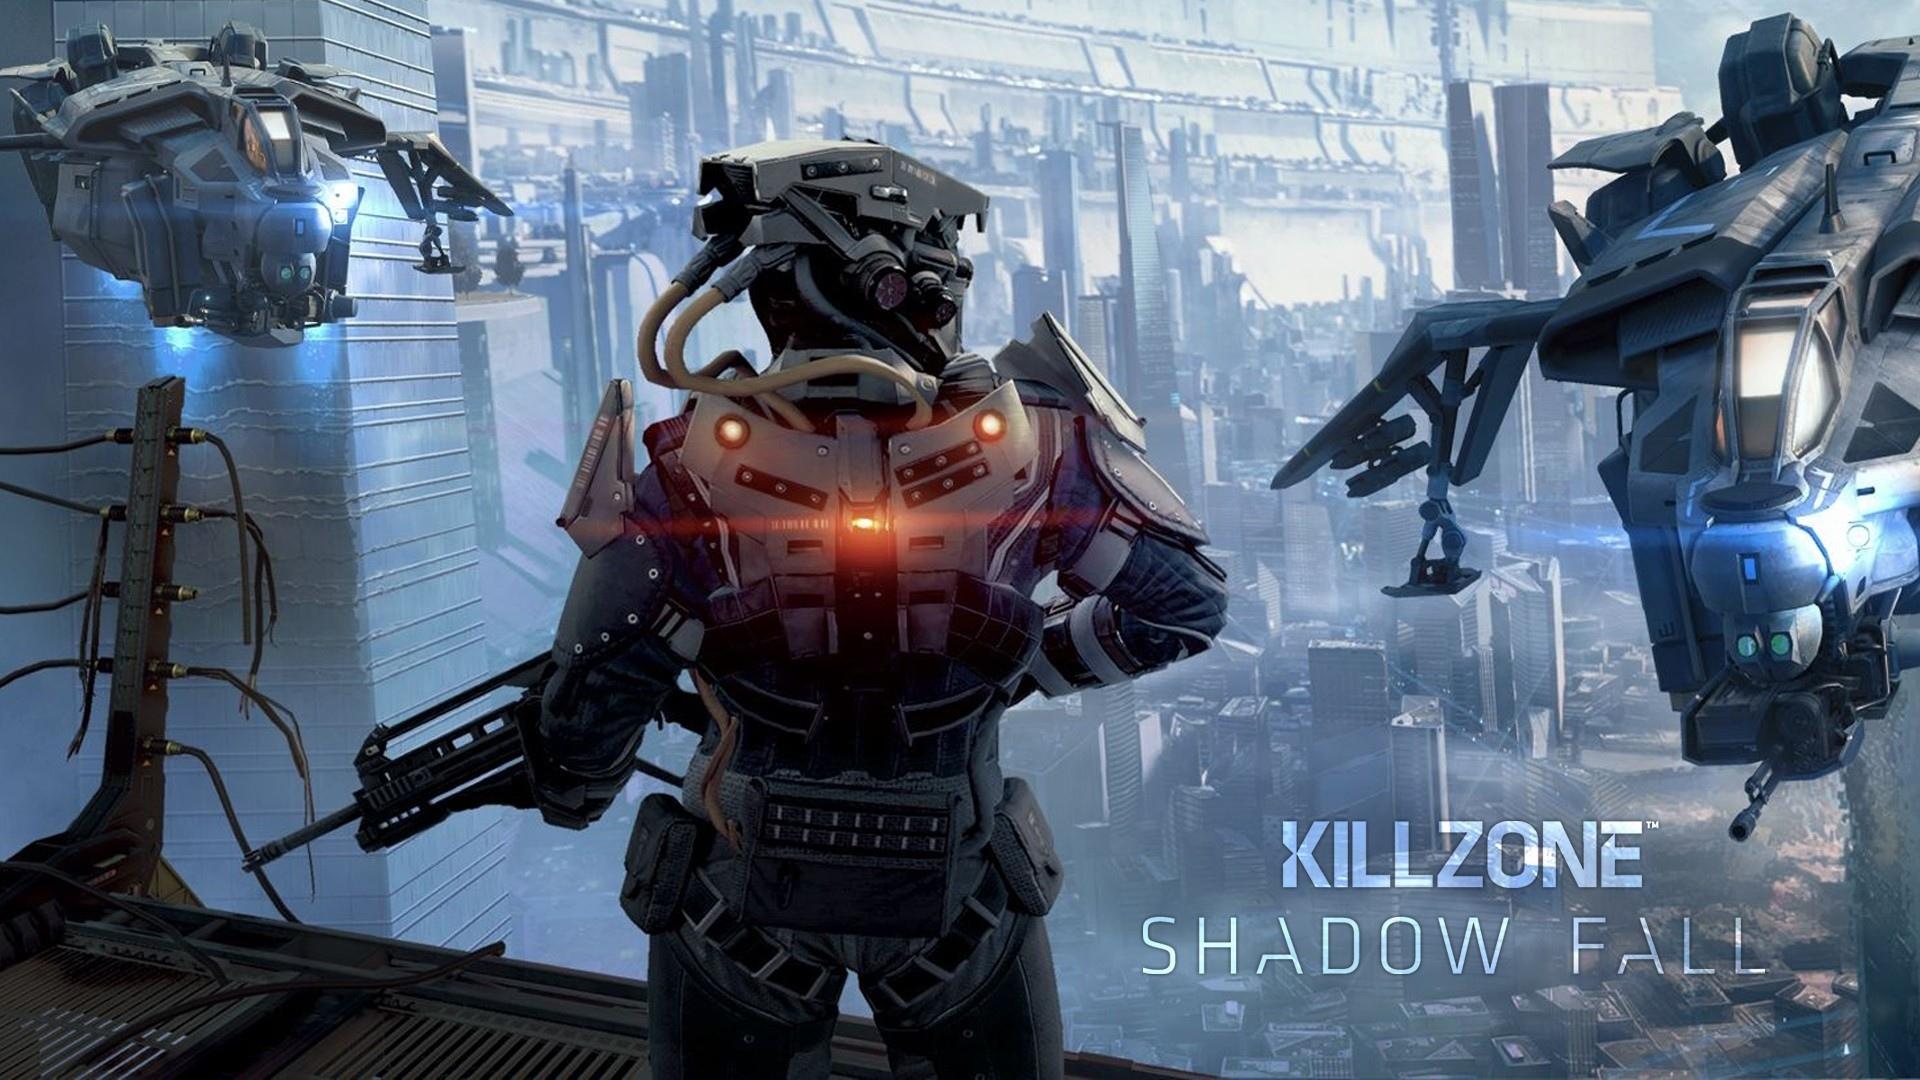 Killzone Shadow Fall at 2048 x 2048 iPad size wallpapers HD quality